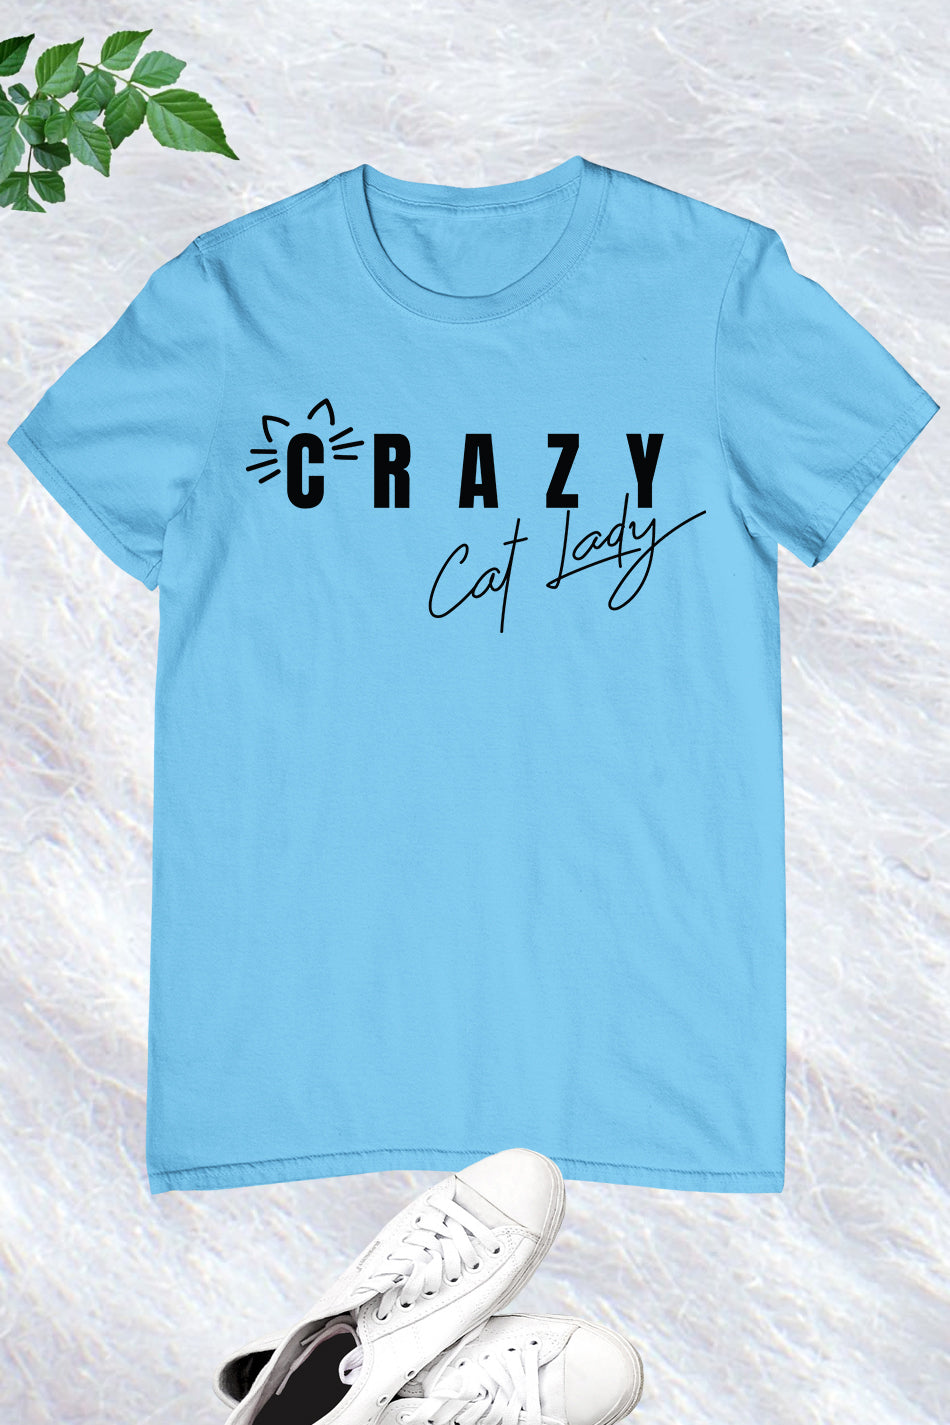 Crazy Cat Lady Shirt